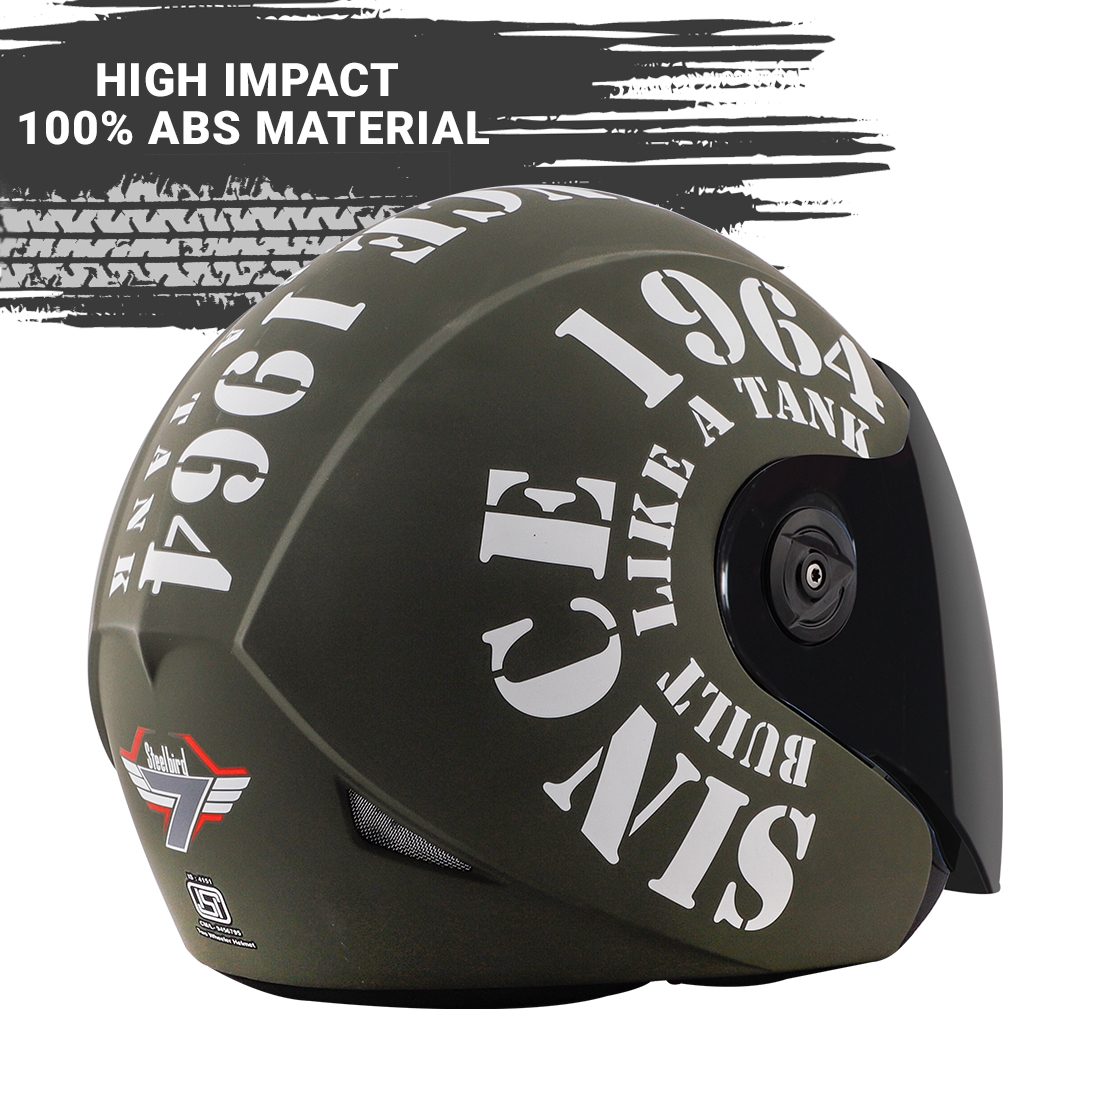 Steelbird SB-43 Yoyo Tank Open Face Graphic Helmet (Matt Battle Green White With Smoke Visor)